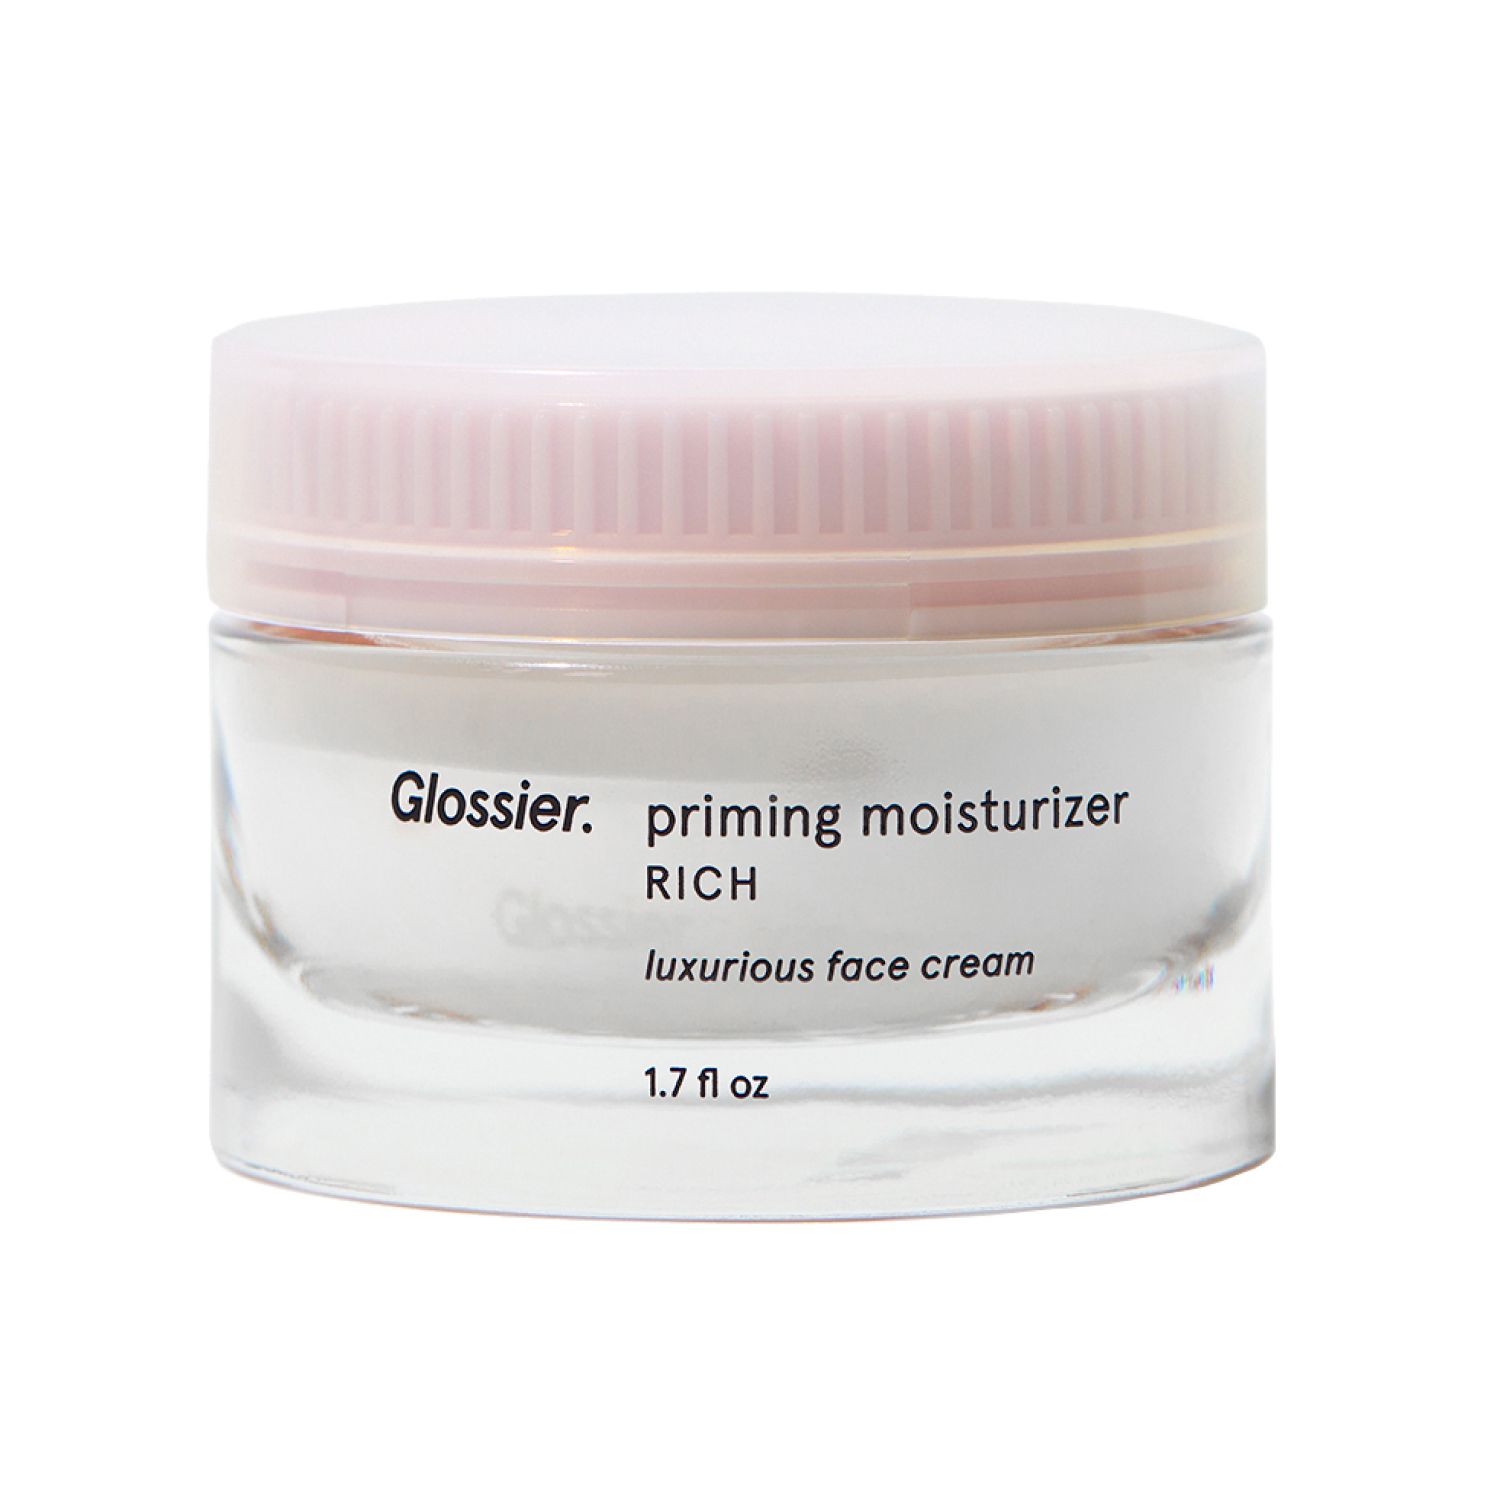 priming moisturizer rich face cream with ceramides (crema facial con ceramidas)